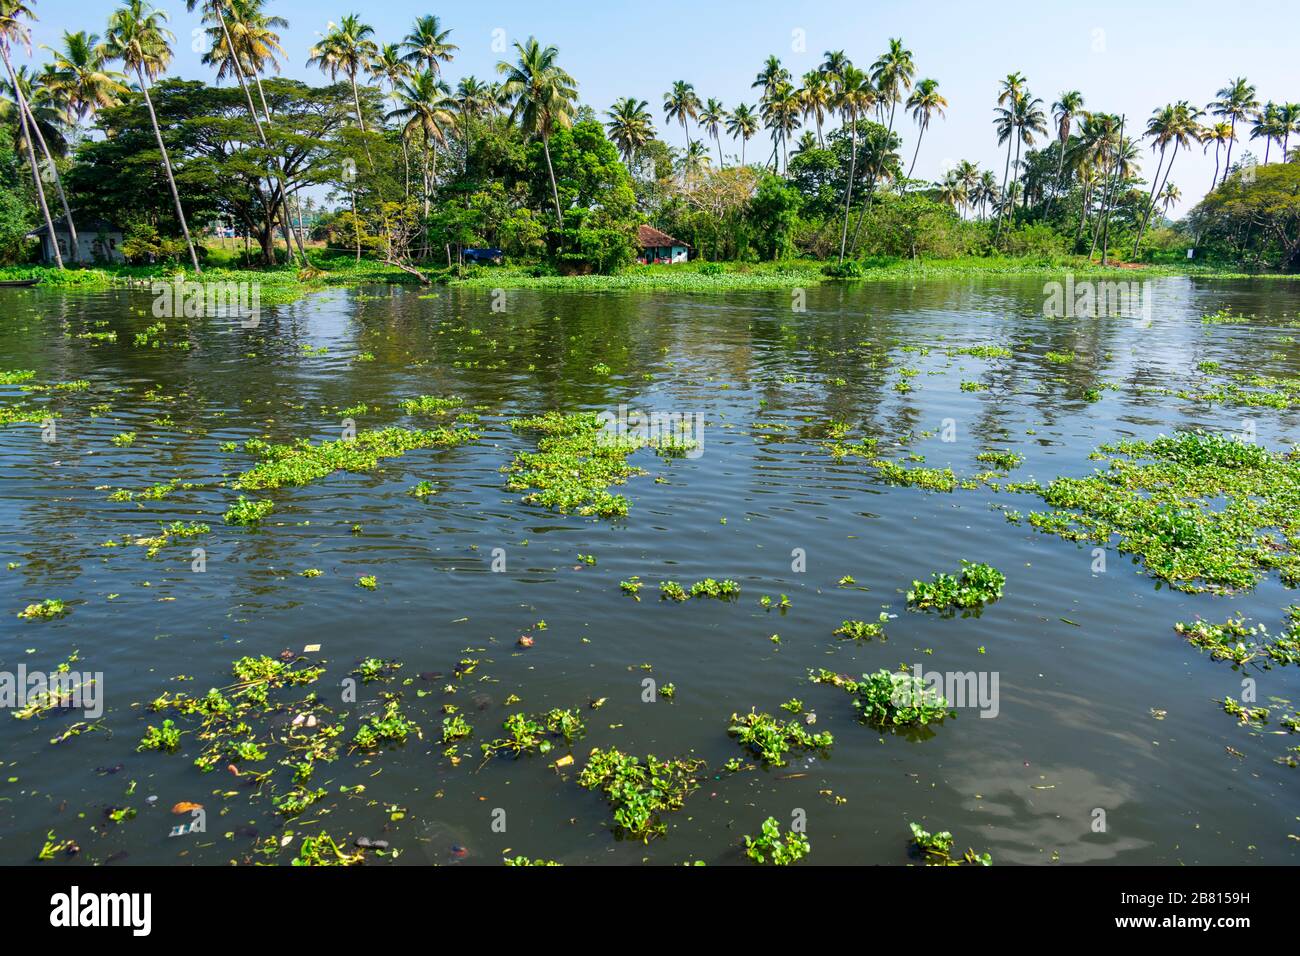 Alapphuzza, Kerala, India - December 25 2019 - Vegetation on Vembanad lake Stock Photo